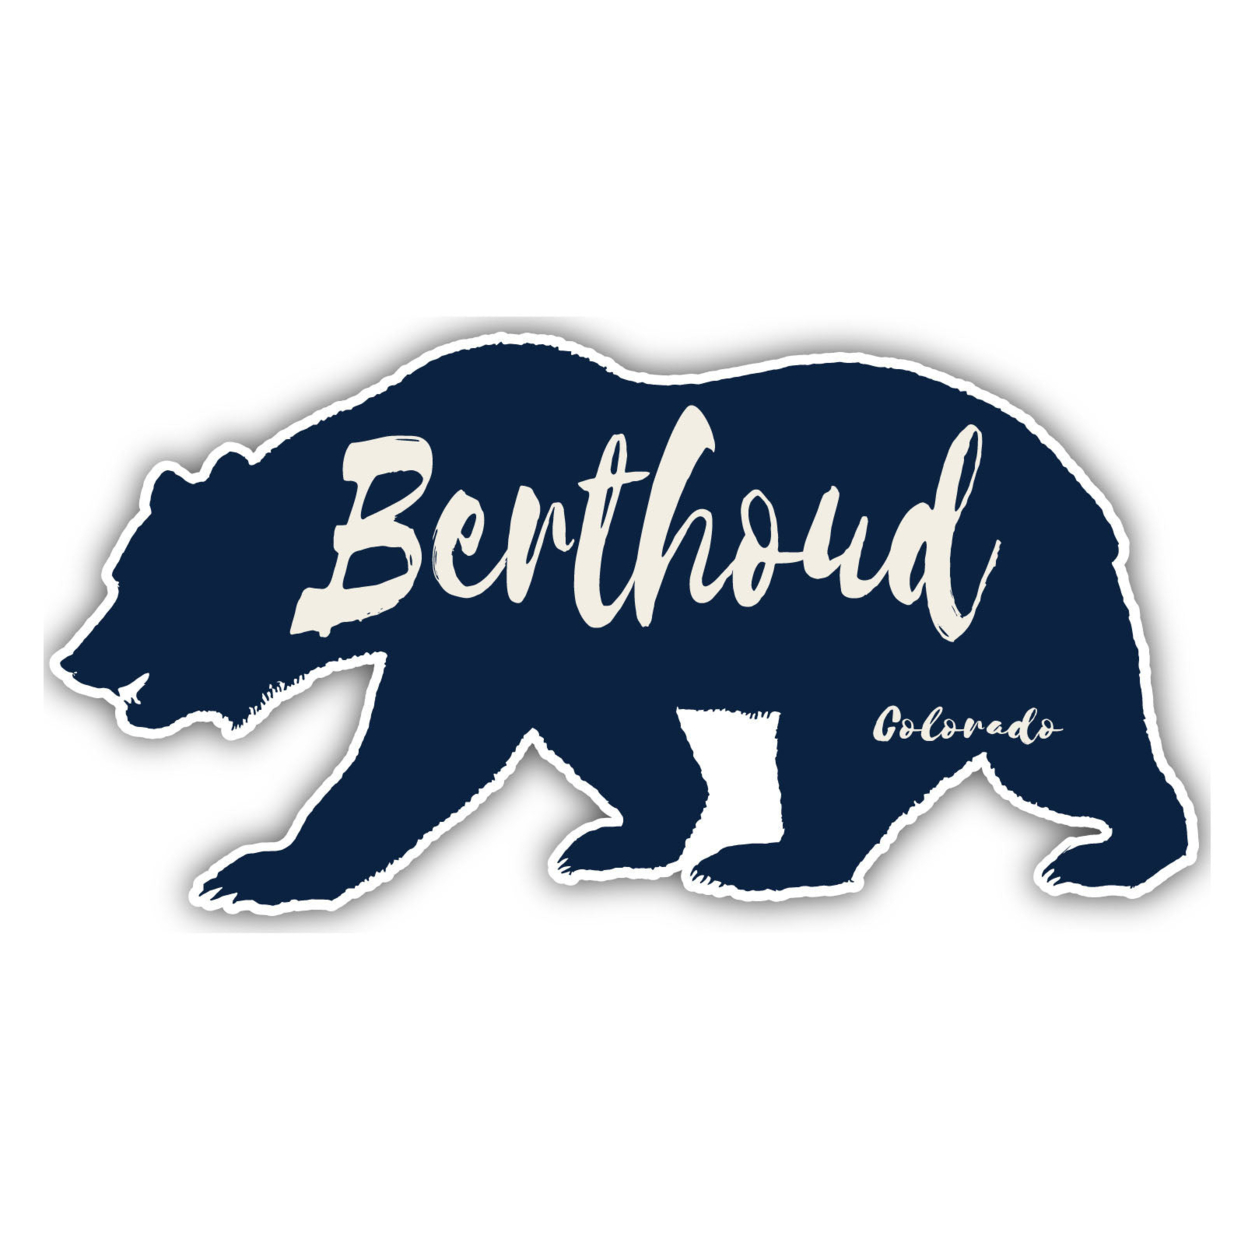 Berthoud Colorado Souvenir Decorative Stickers (Choose Theme And Size) - Single Unit, 2-Inch, Tent